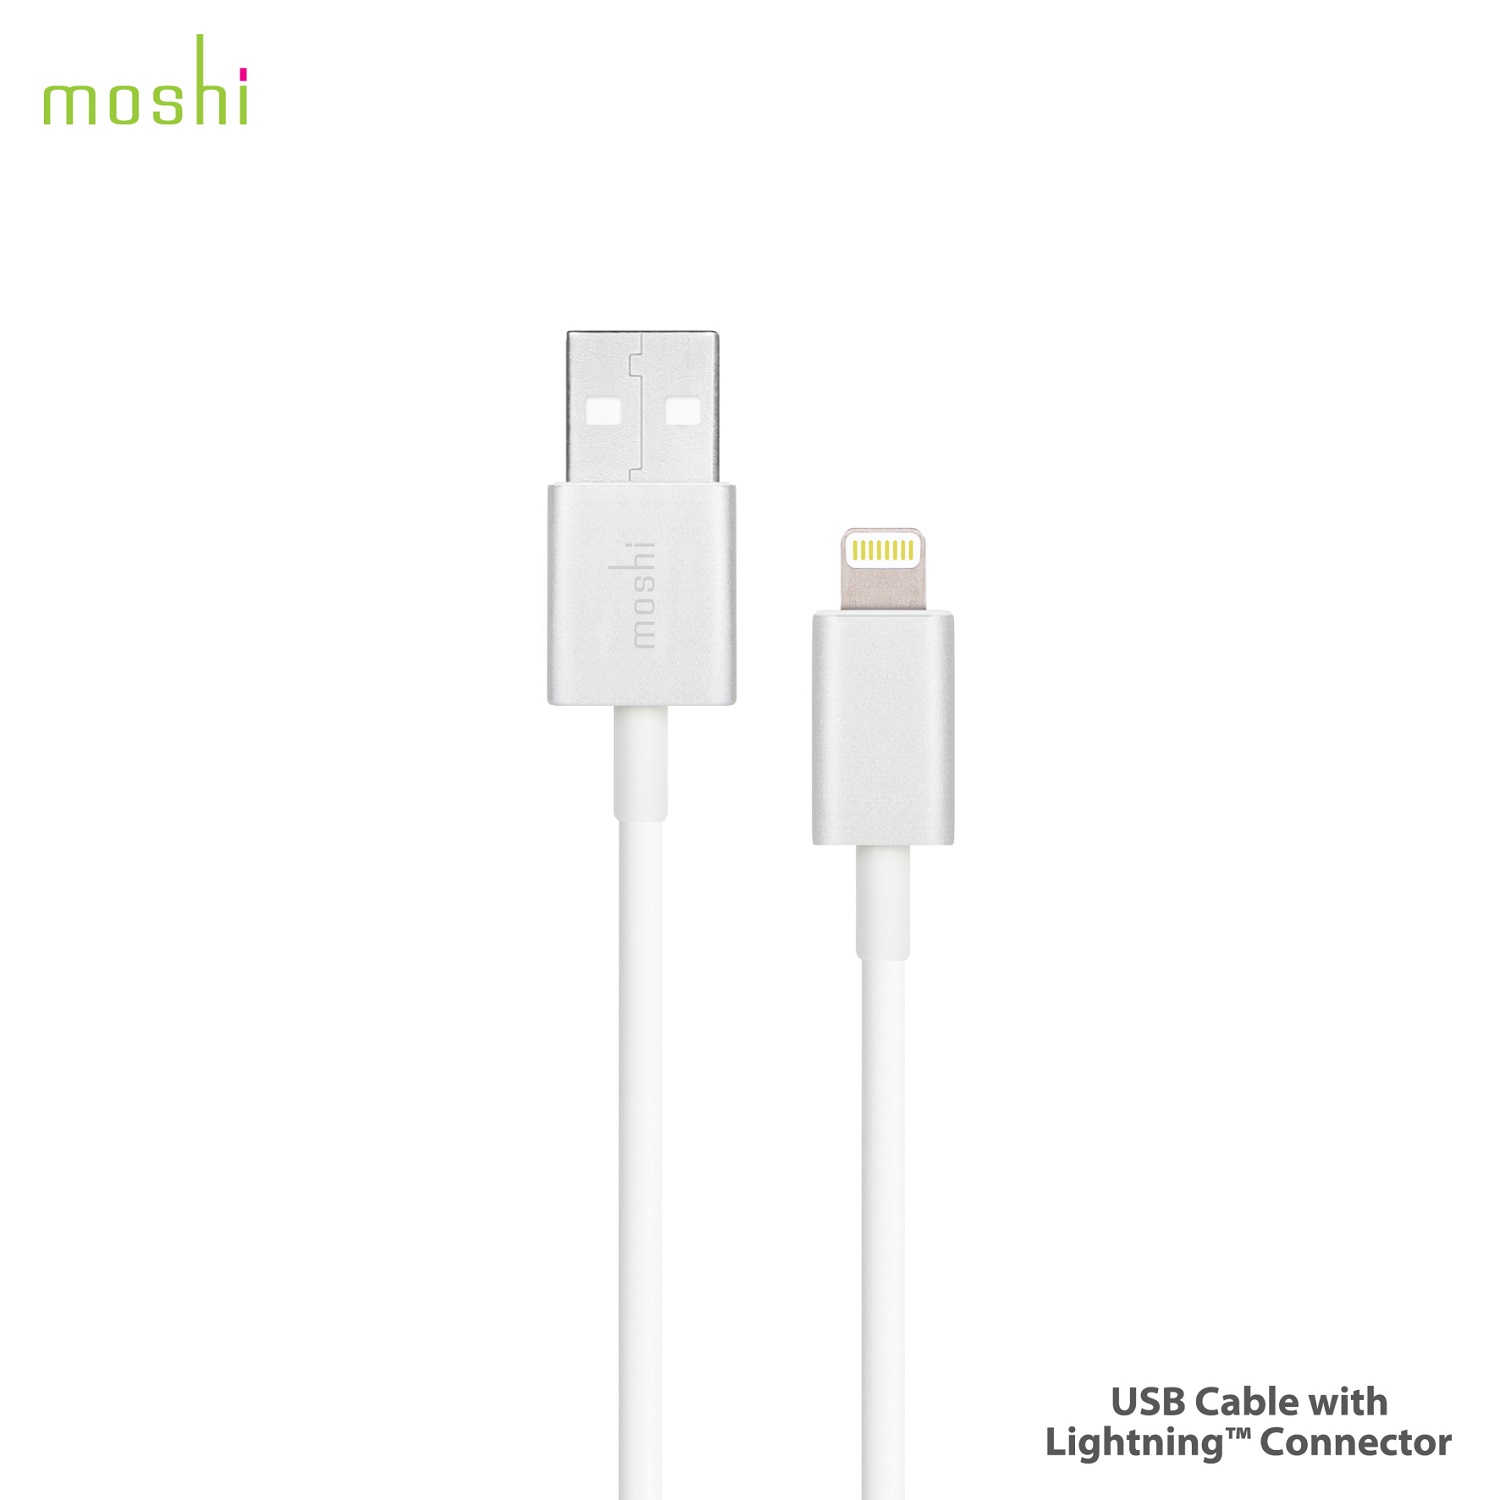 Moshi Lightning Cable